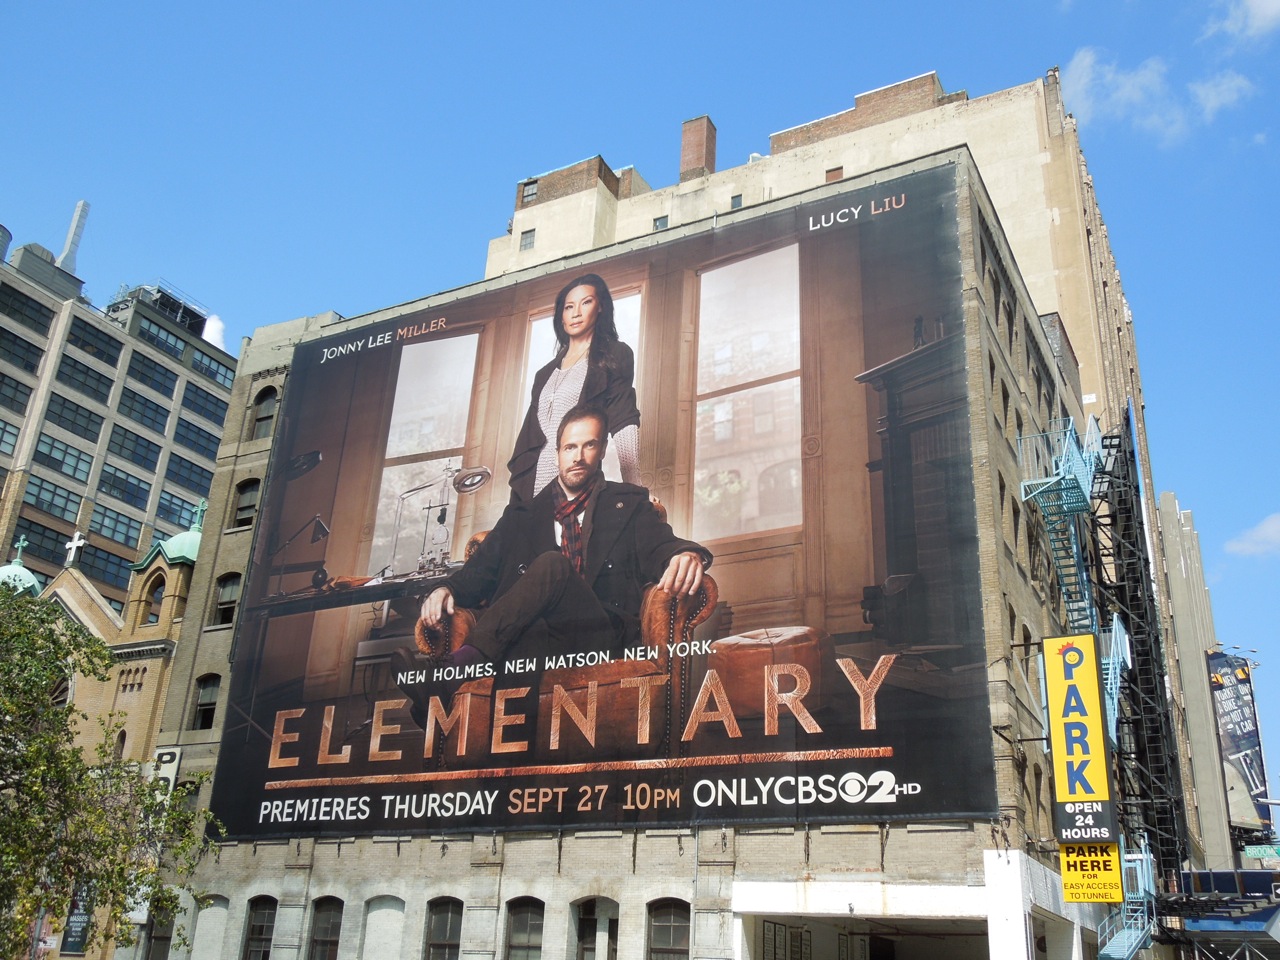 http://1.bp.blogspot.com/-2N60WIfQJQ0/UEEZsdZMIxI/AAAAAAAAyh0/yn_PRPBw9kk/s1600/Giant+Elementary+season1+billboard+NYC.jpg